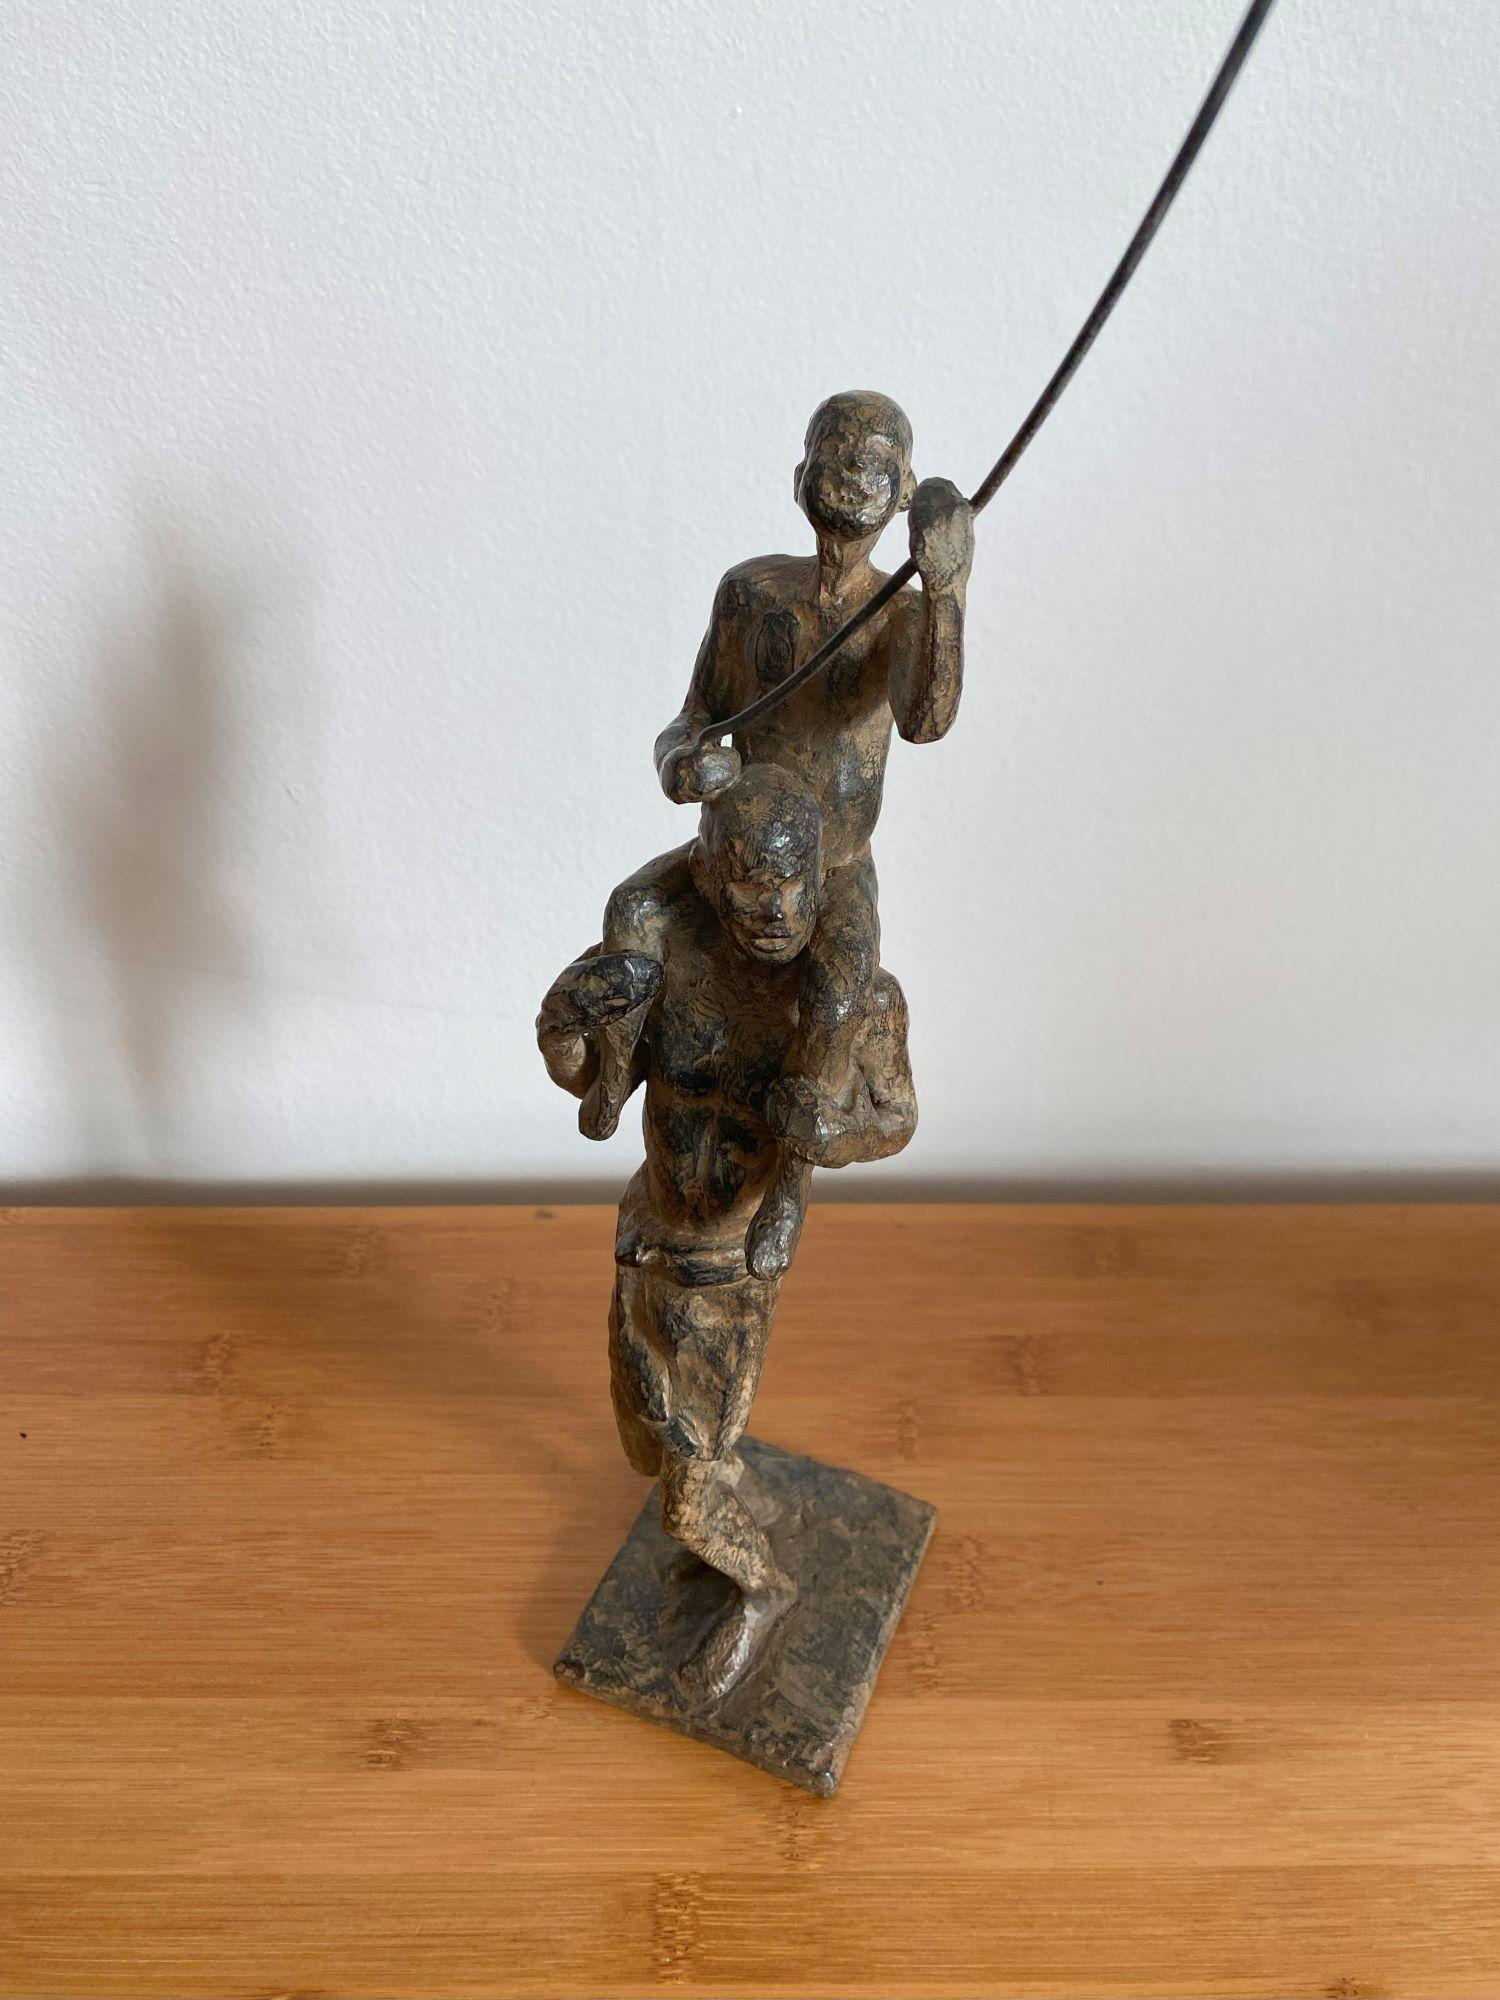 Childhood’s Sail VI by Marine de Soos - Bronze sculpture, child's figure, kite For Sale 4